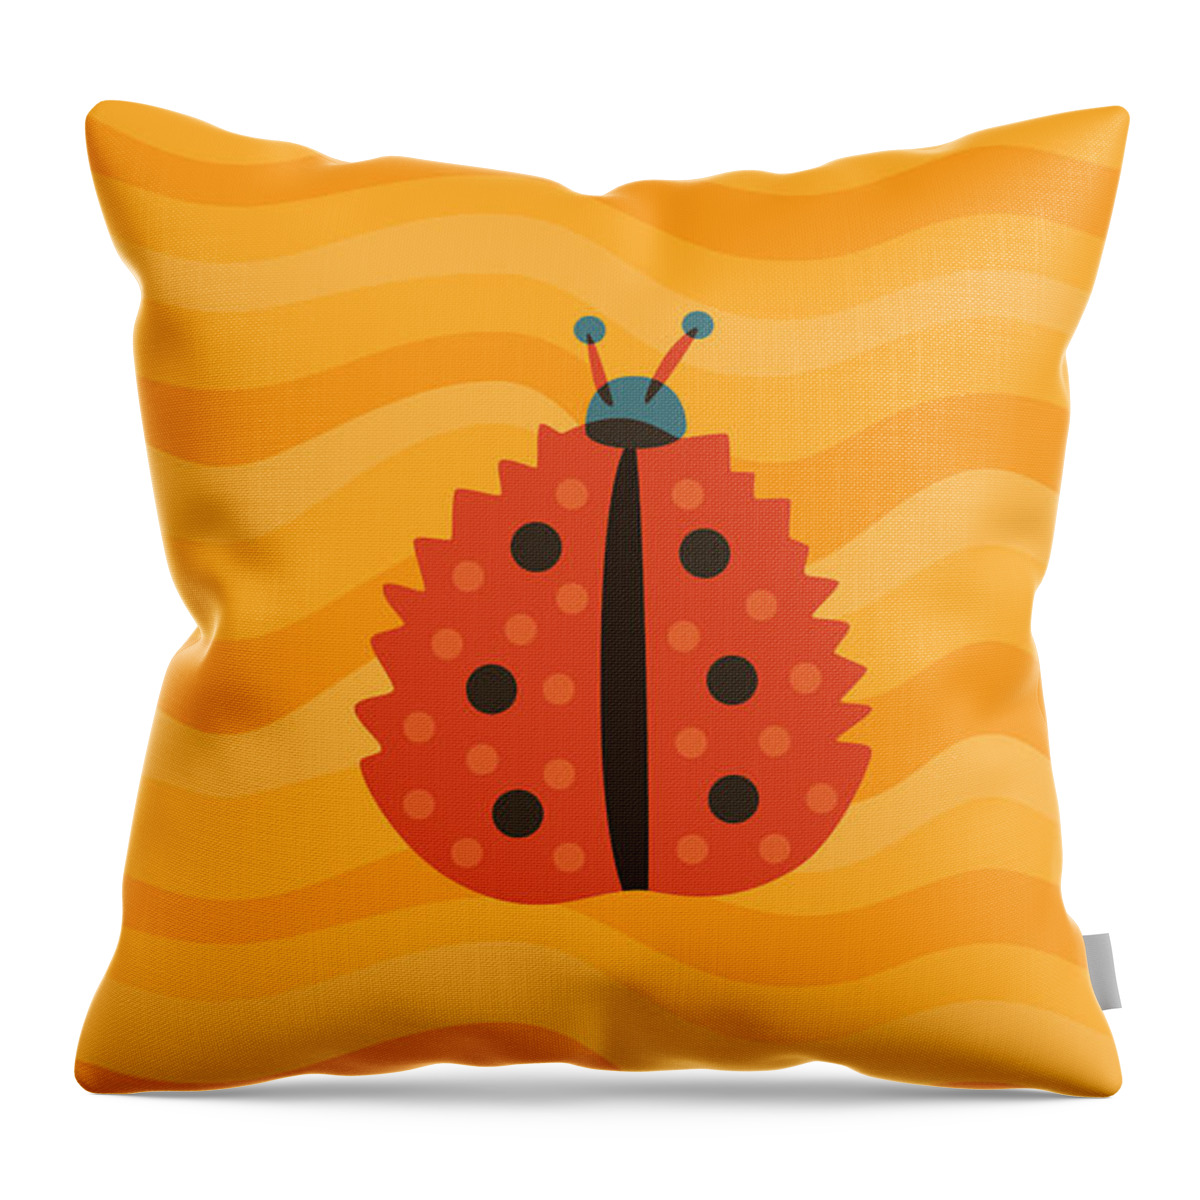 Mimicry Throw Pillow featuring the digital art Orange Ladybug Masked As Autumn Leaf by Boriana Giormova